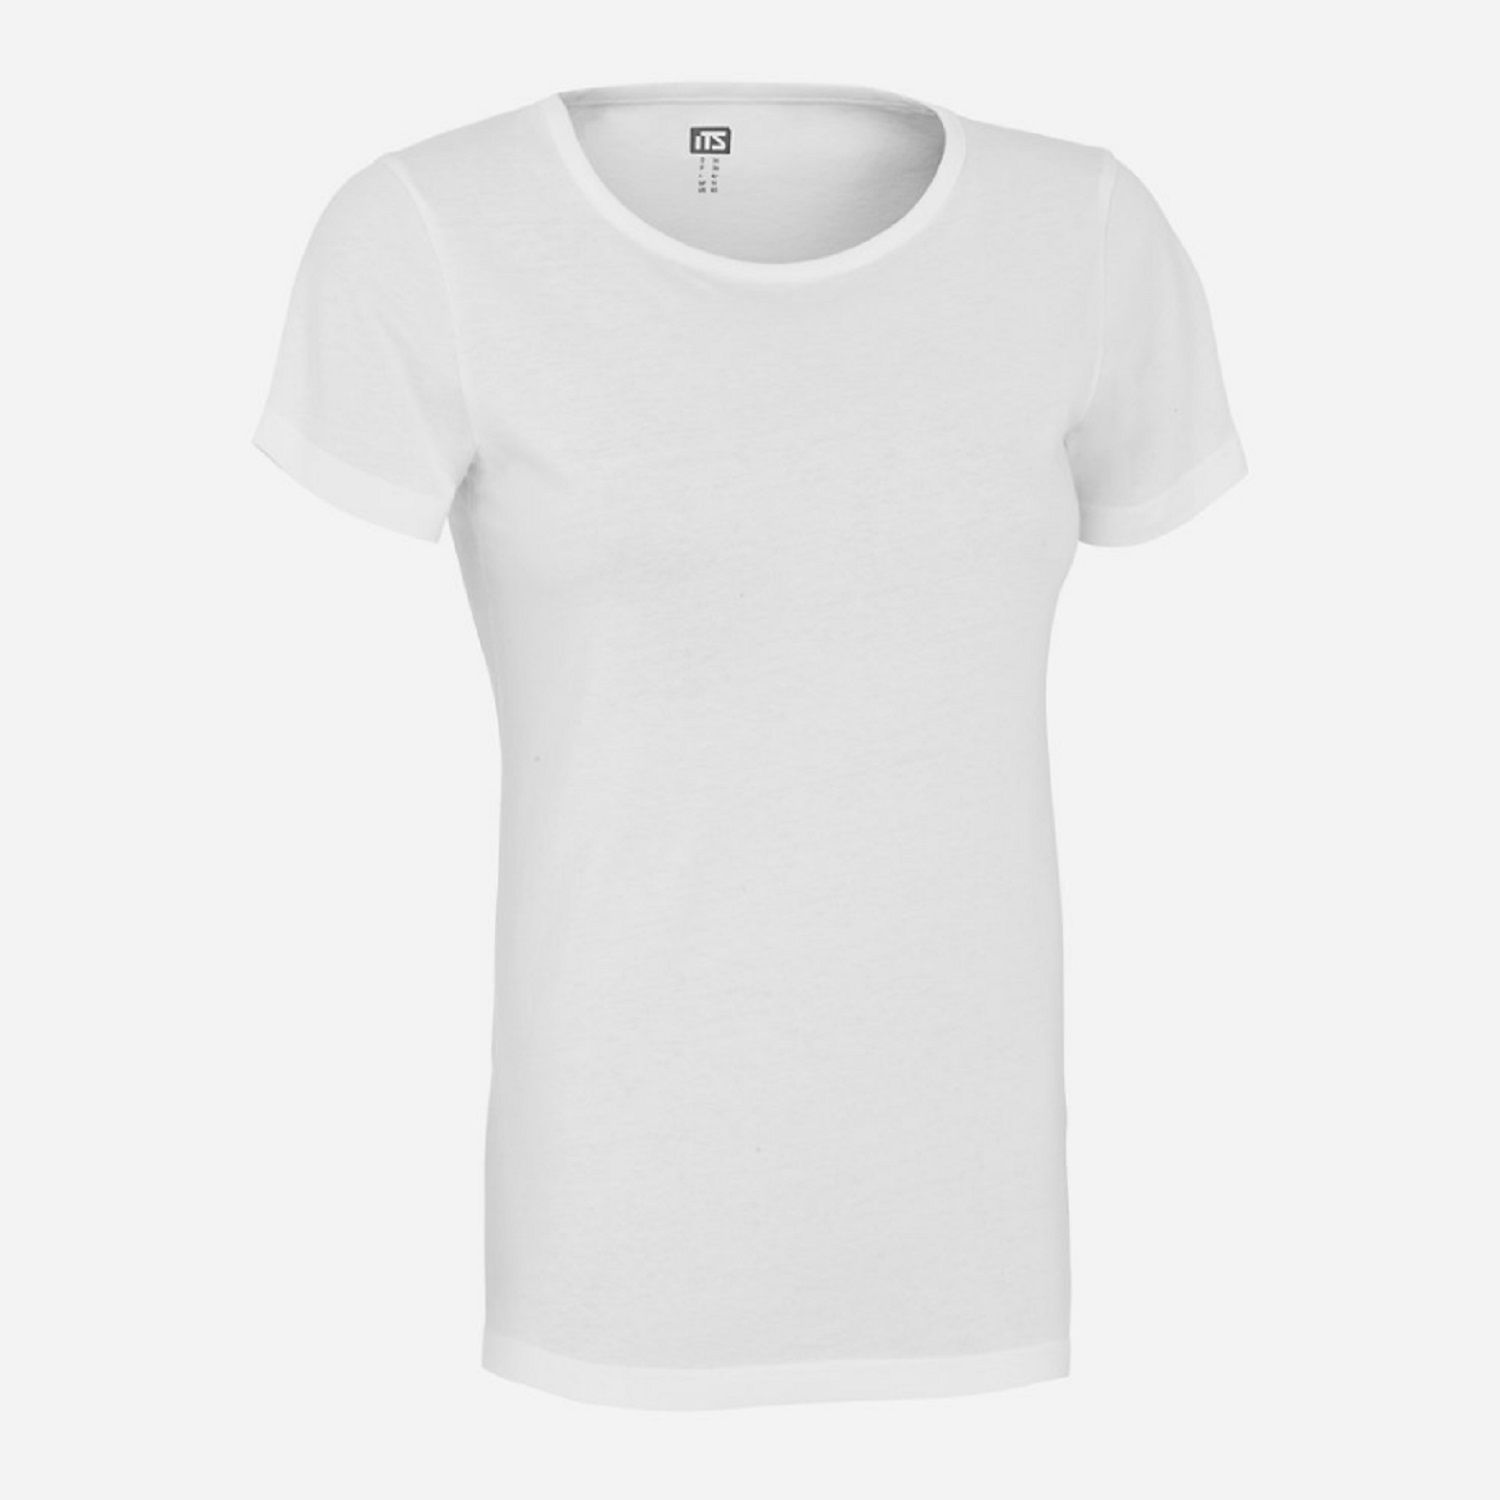 E-shop ITS dámske športové tričko Systa Farba: Biela